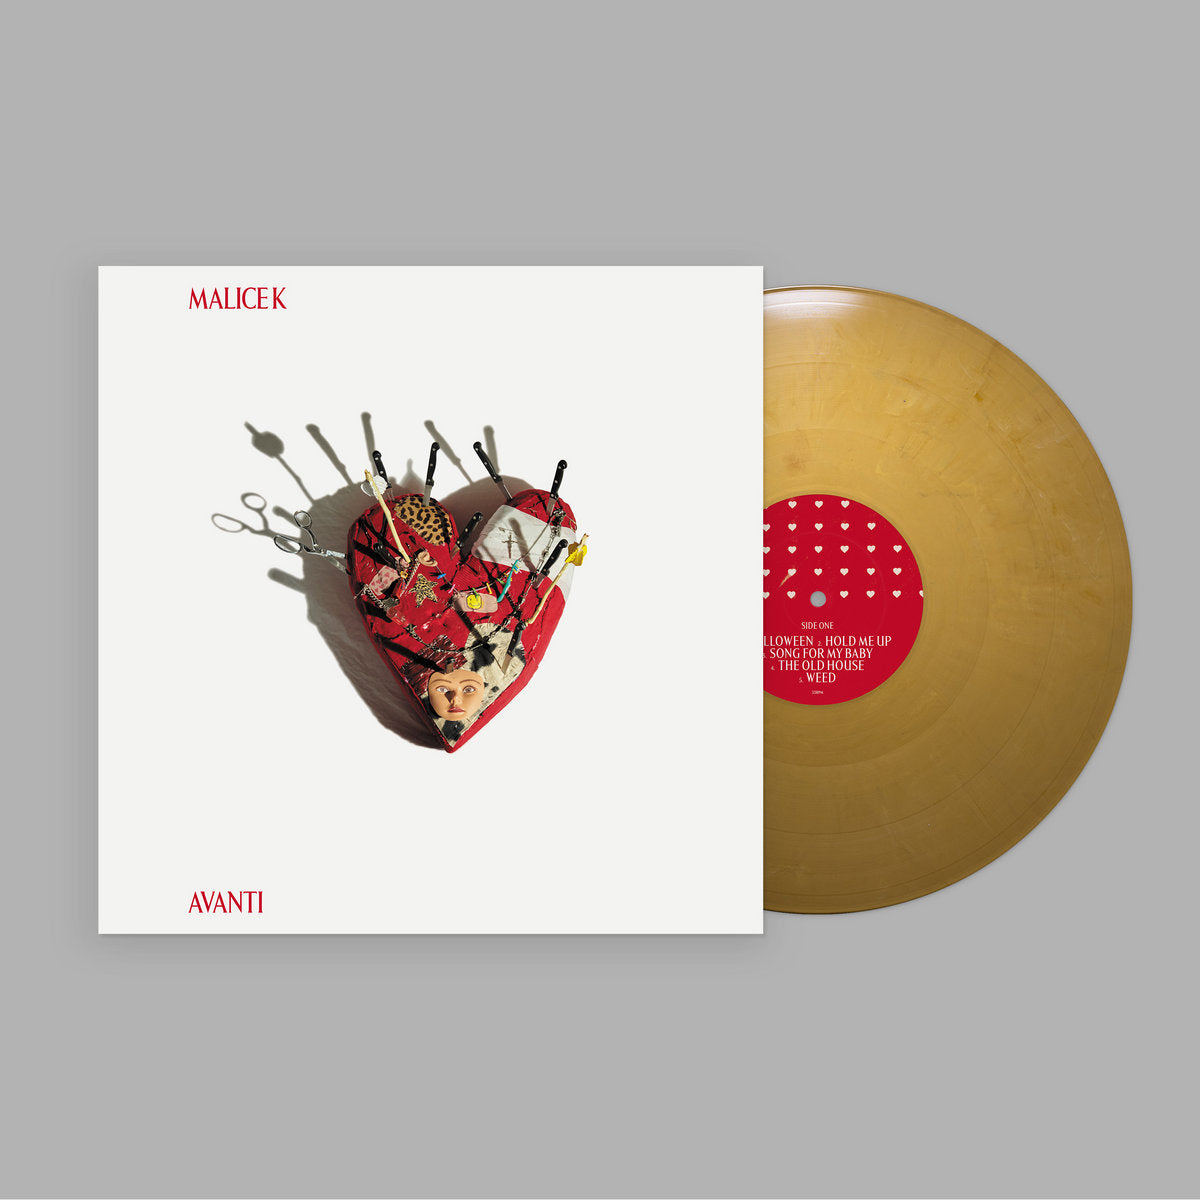 Malice K - AVANTI: Limited Gold Vinyl LP